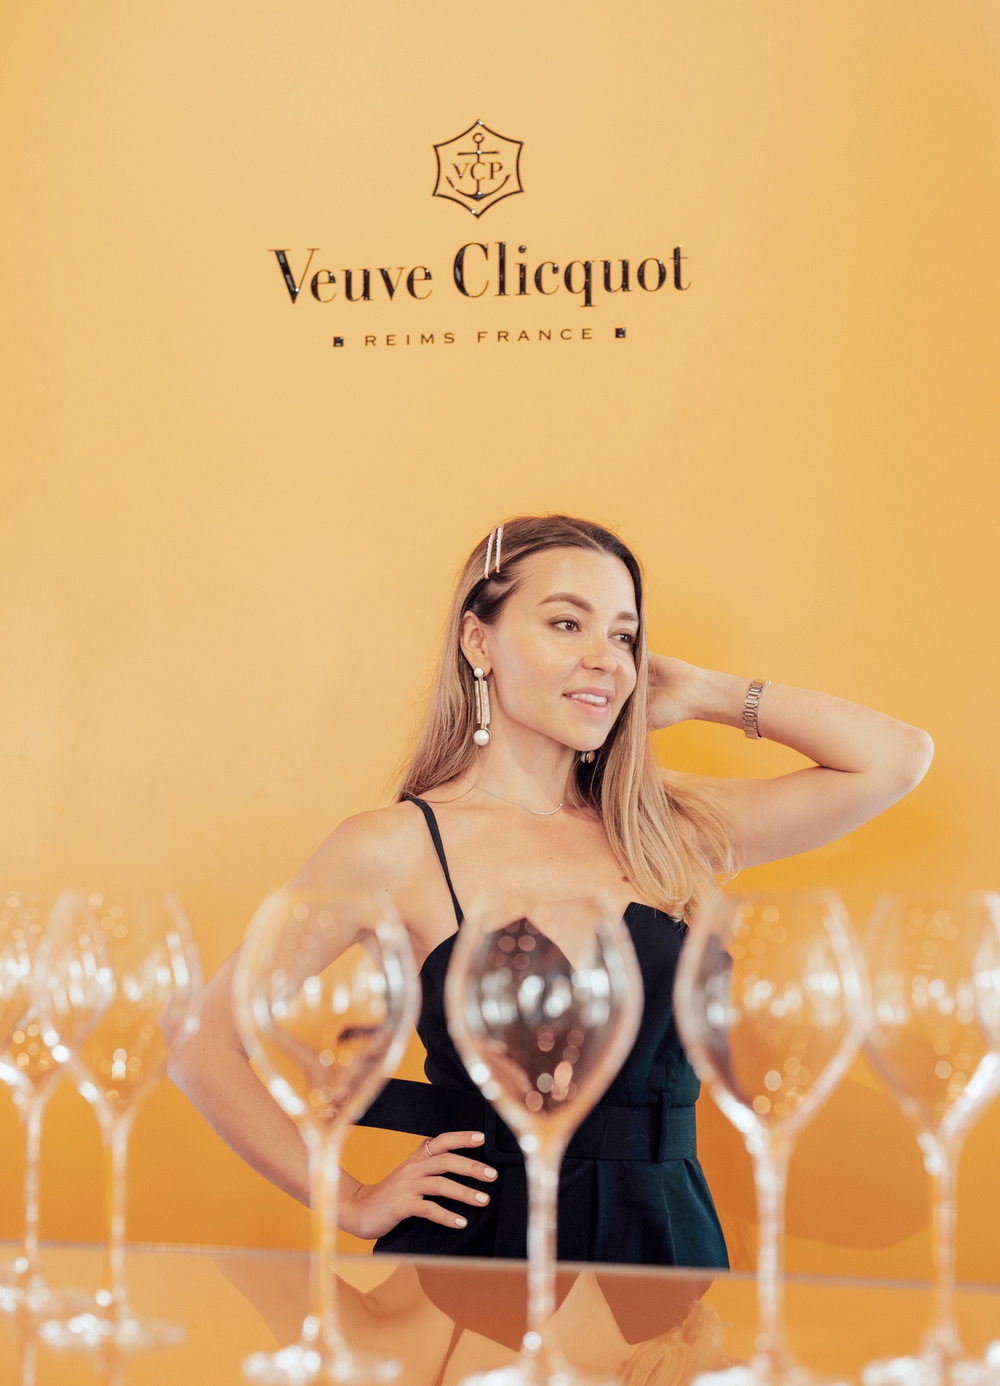 Veuve Clicquot estate, vineyard and cellars - Veuve Clicquot